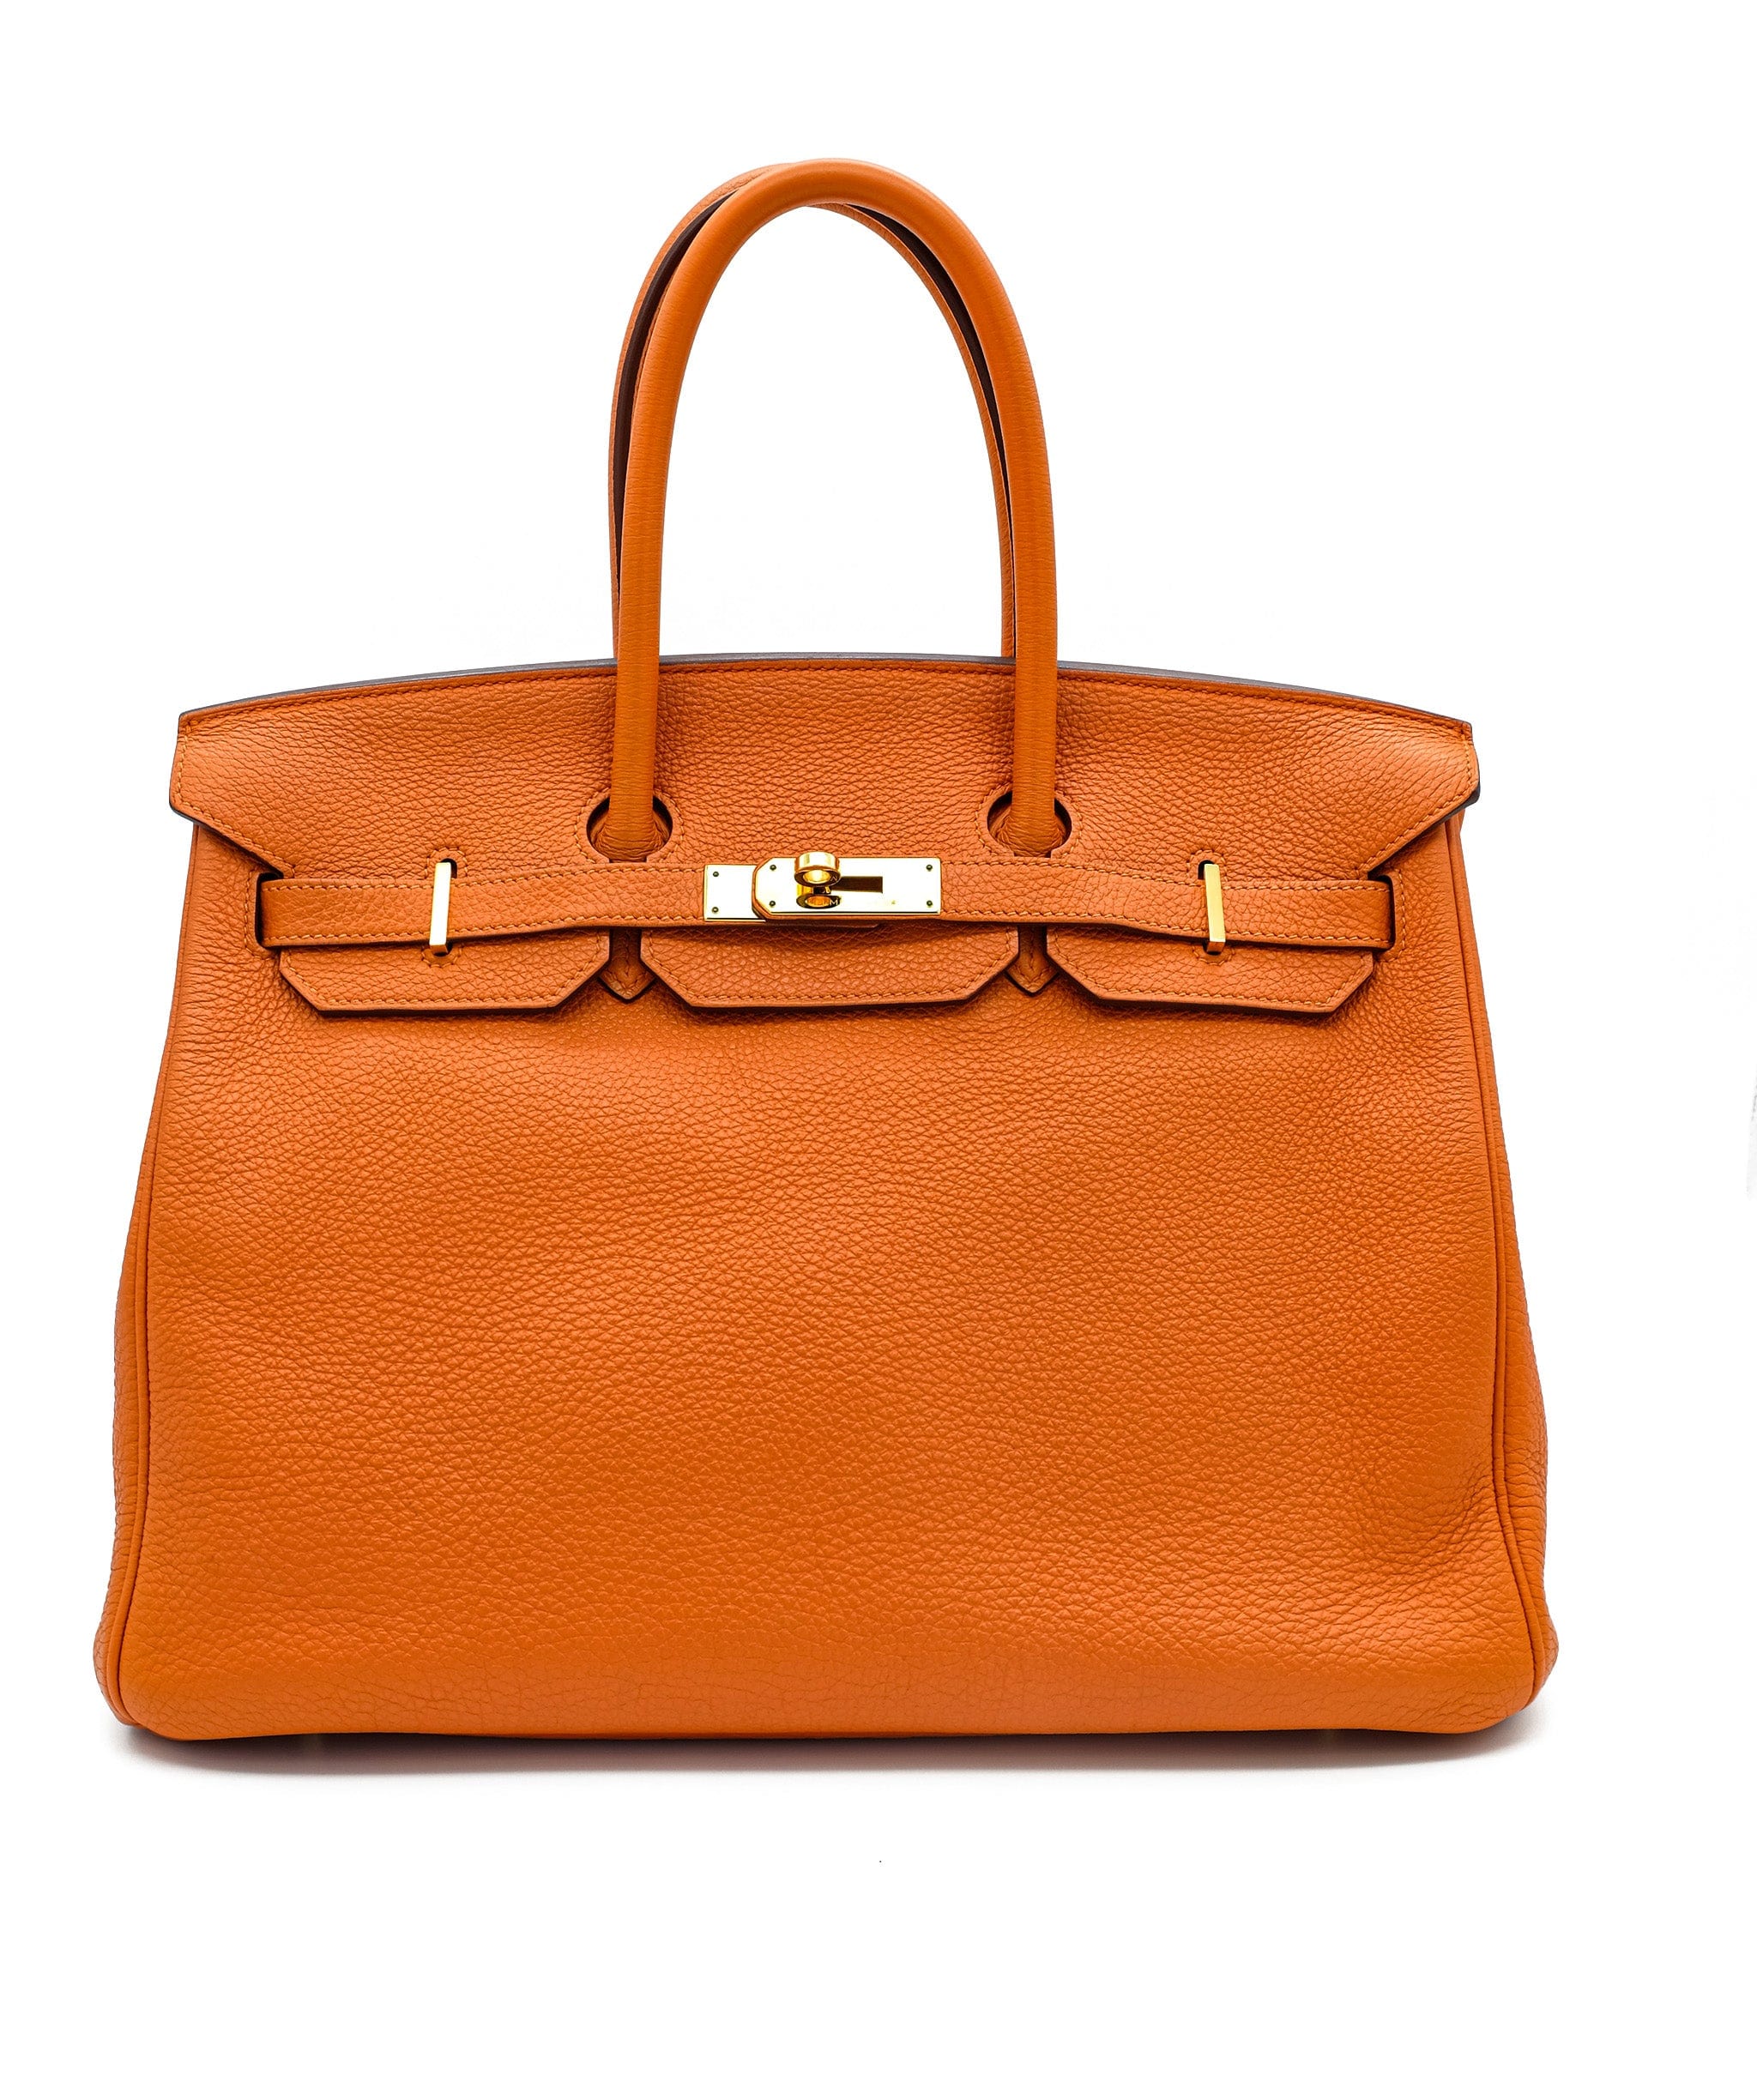 Hermès Hermes Birkin 35 Orange Togo GHW #N SKL1292